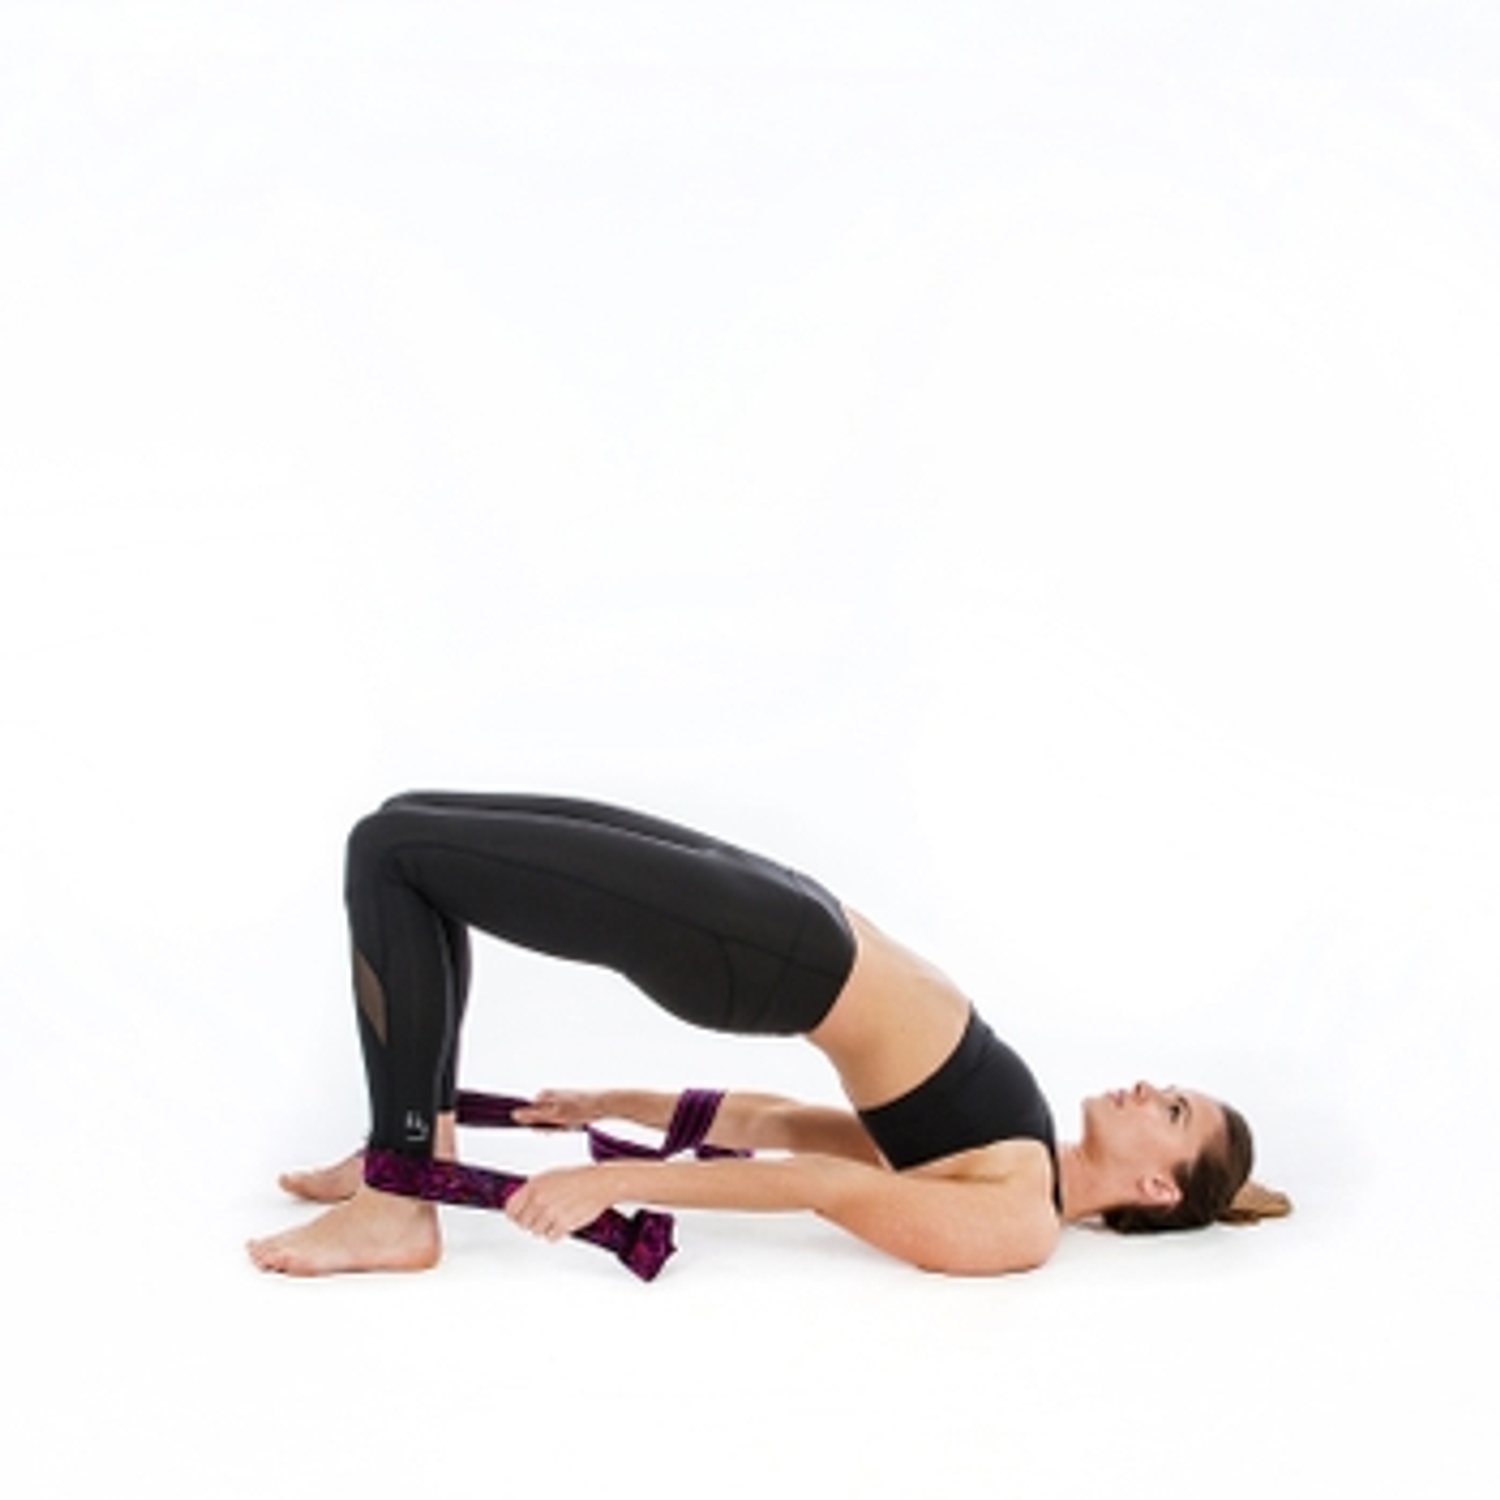 Use a yoga strap